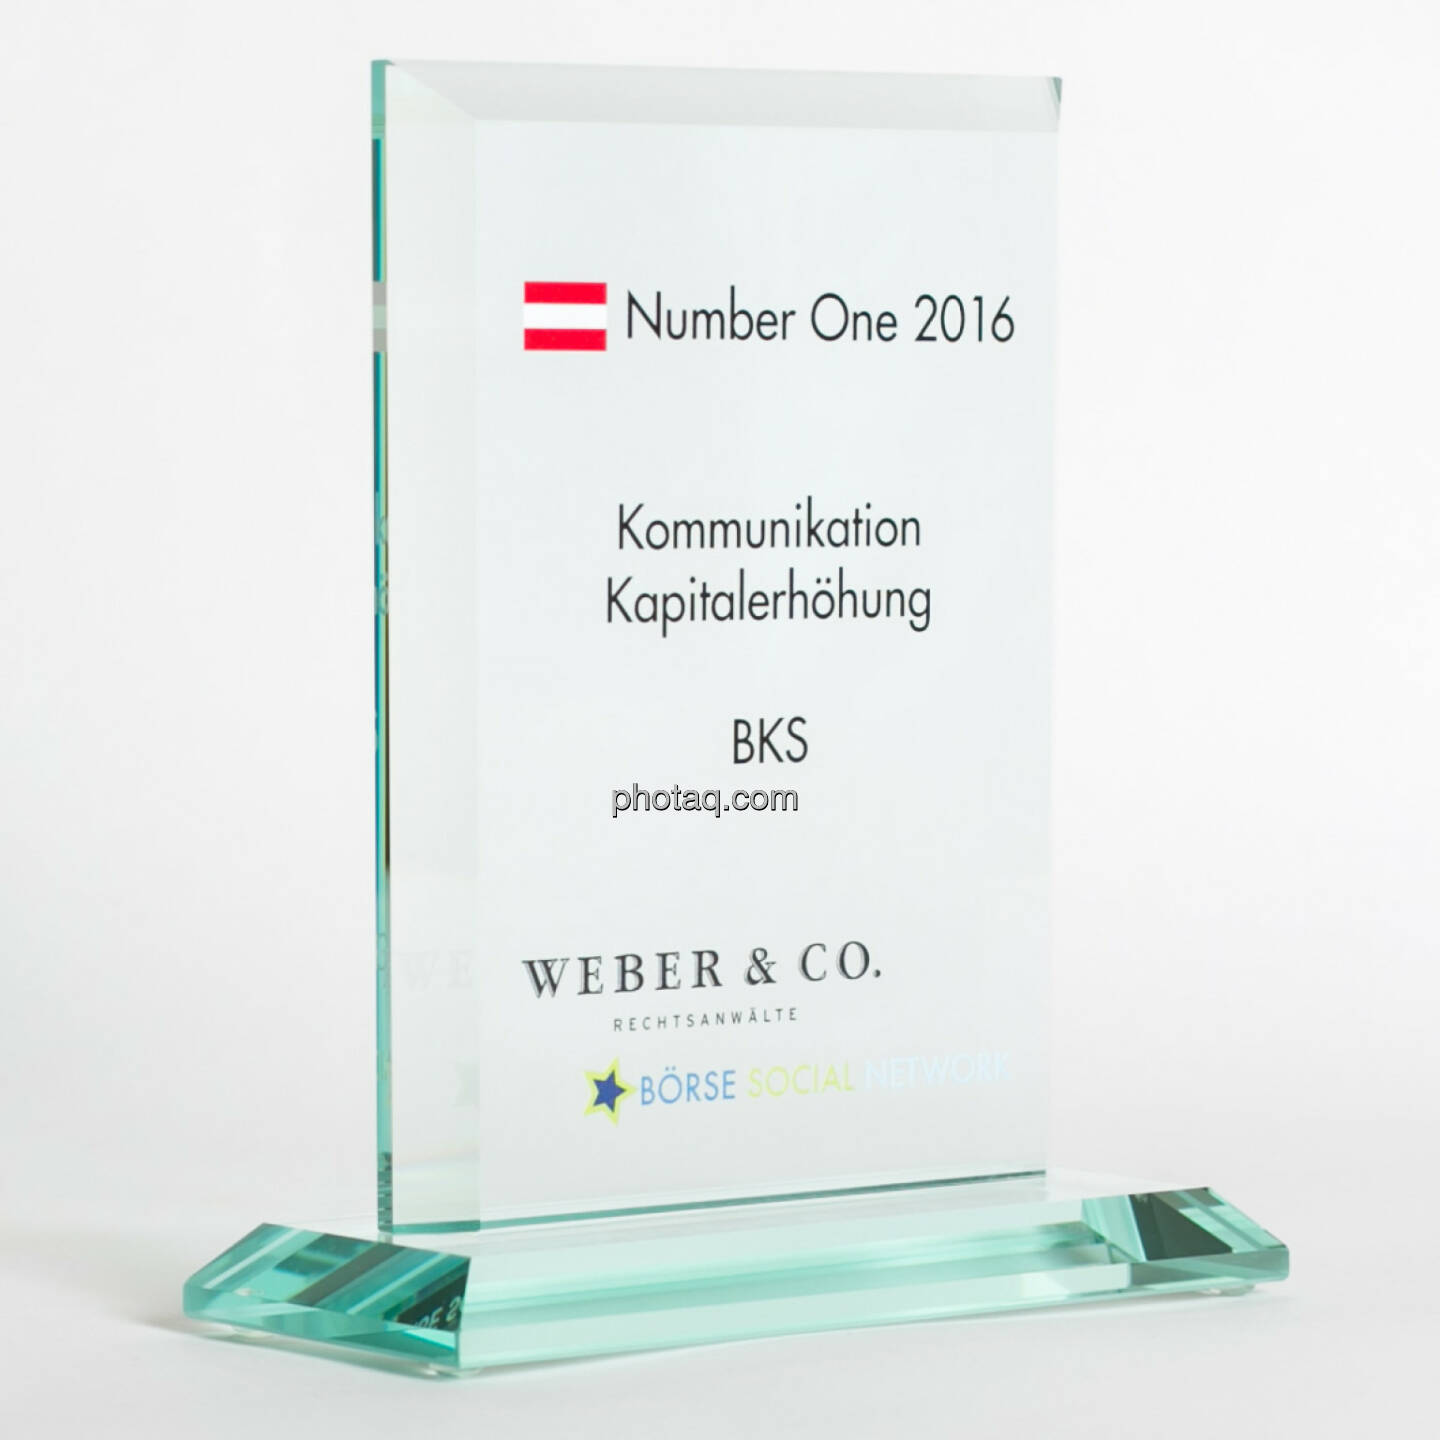 Number One Awards 2016 - Kommunikation Kapitalerhöhung BKS